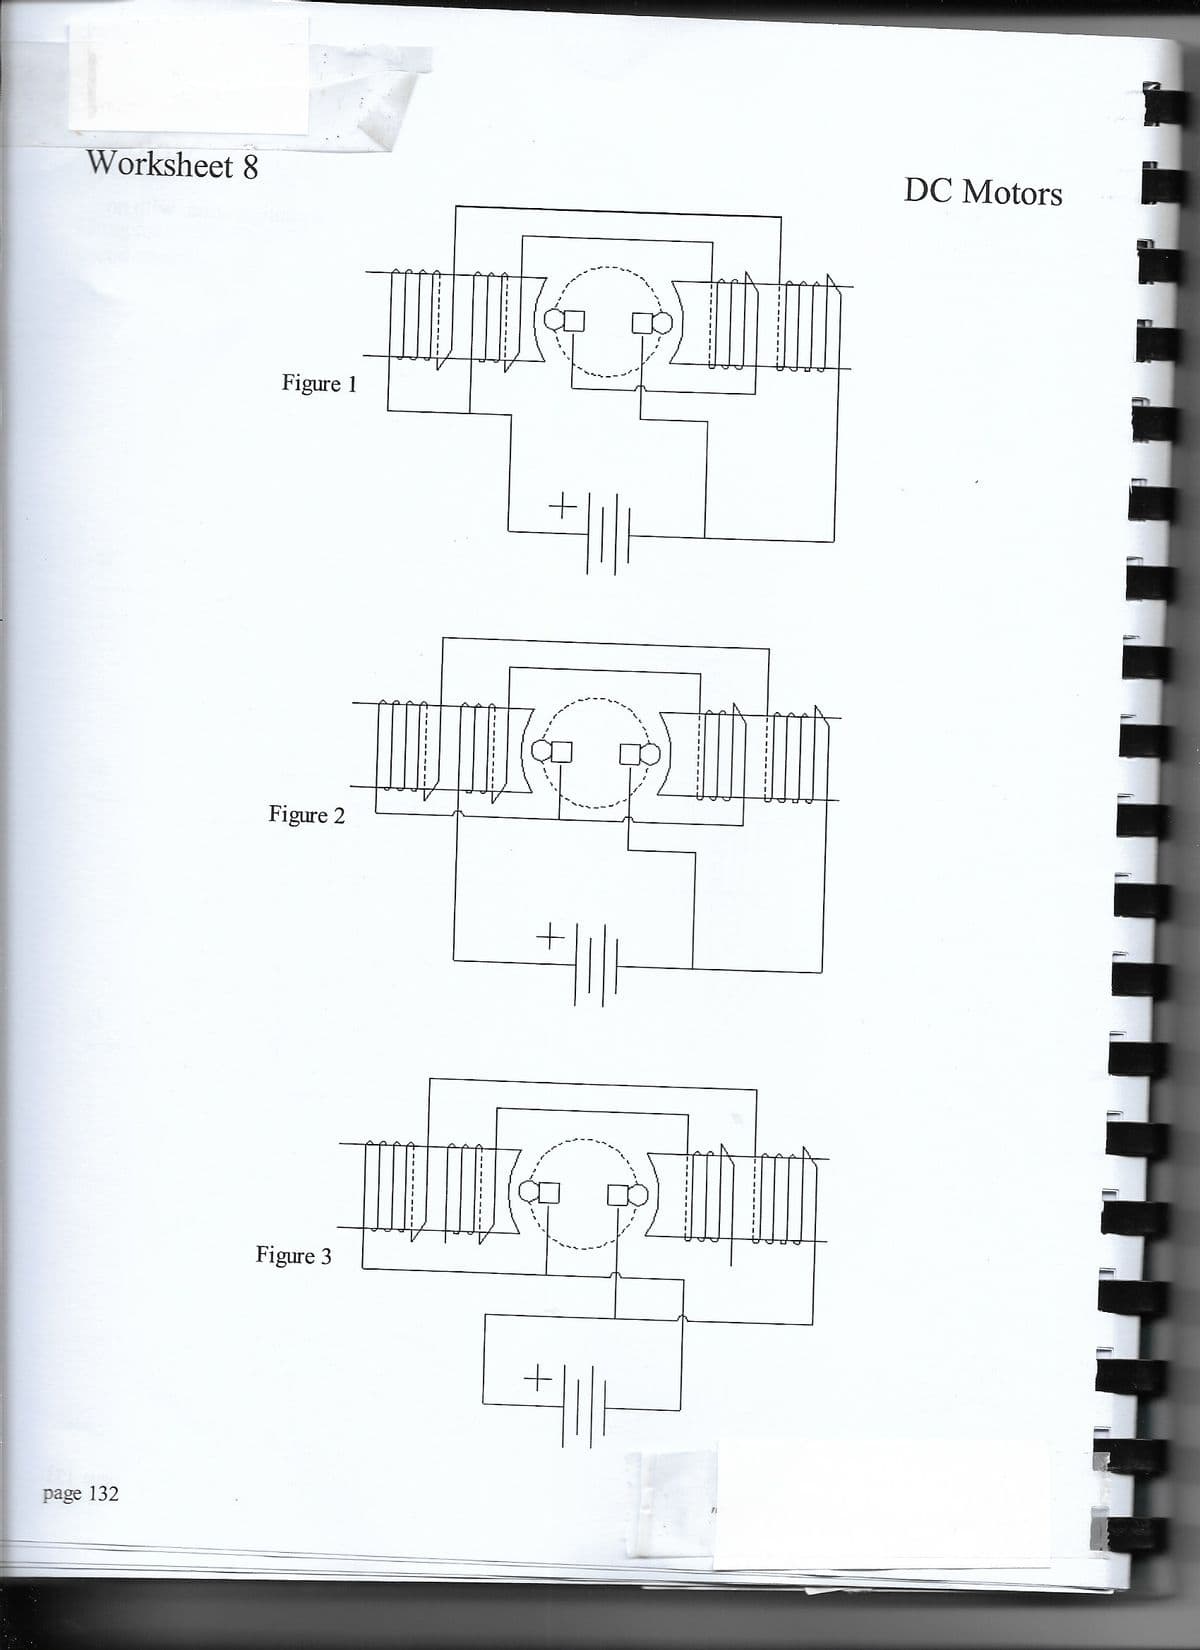 Worksheet 8
DC Motors
Figure 1
Figure 2
Figure 3
page 132
